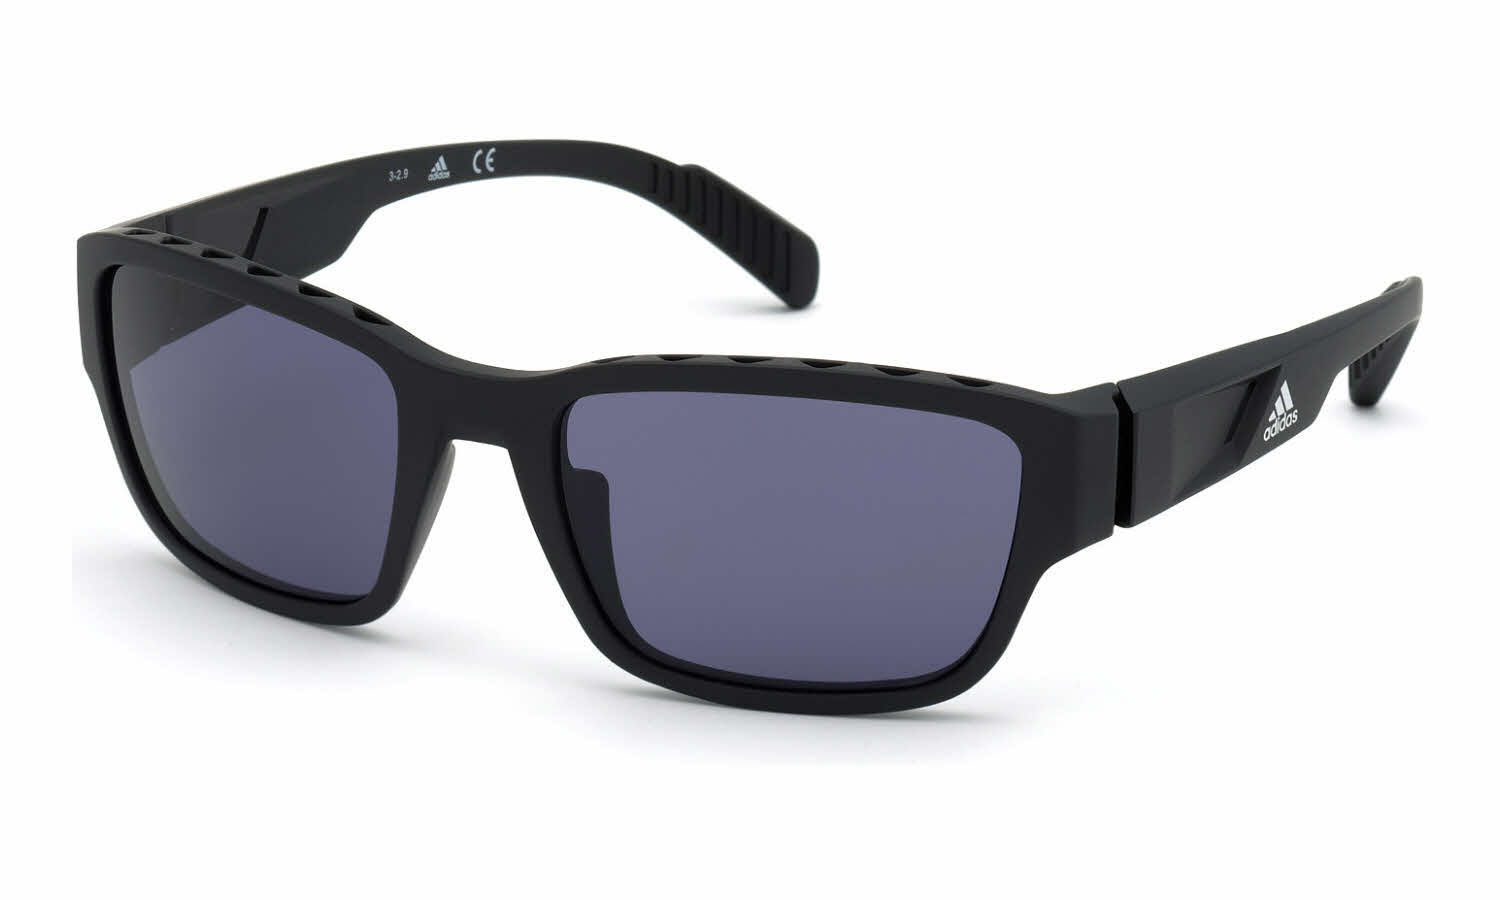 Adidas SP0057 Sunglasses Review: Versatile, Protective Eye